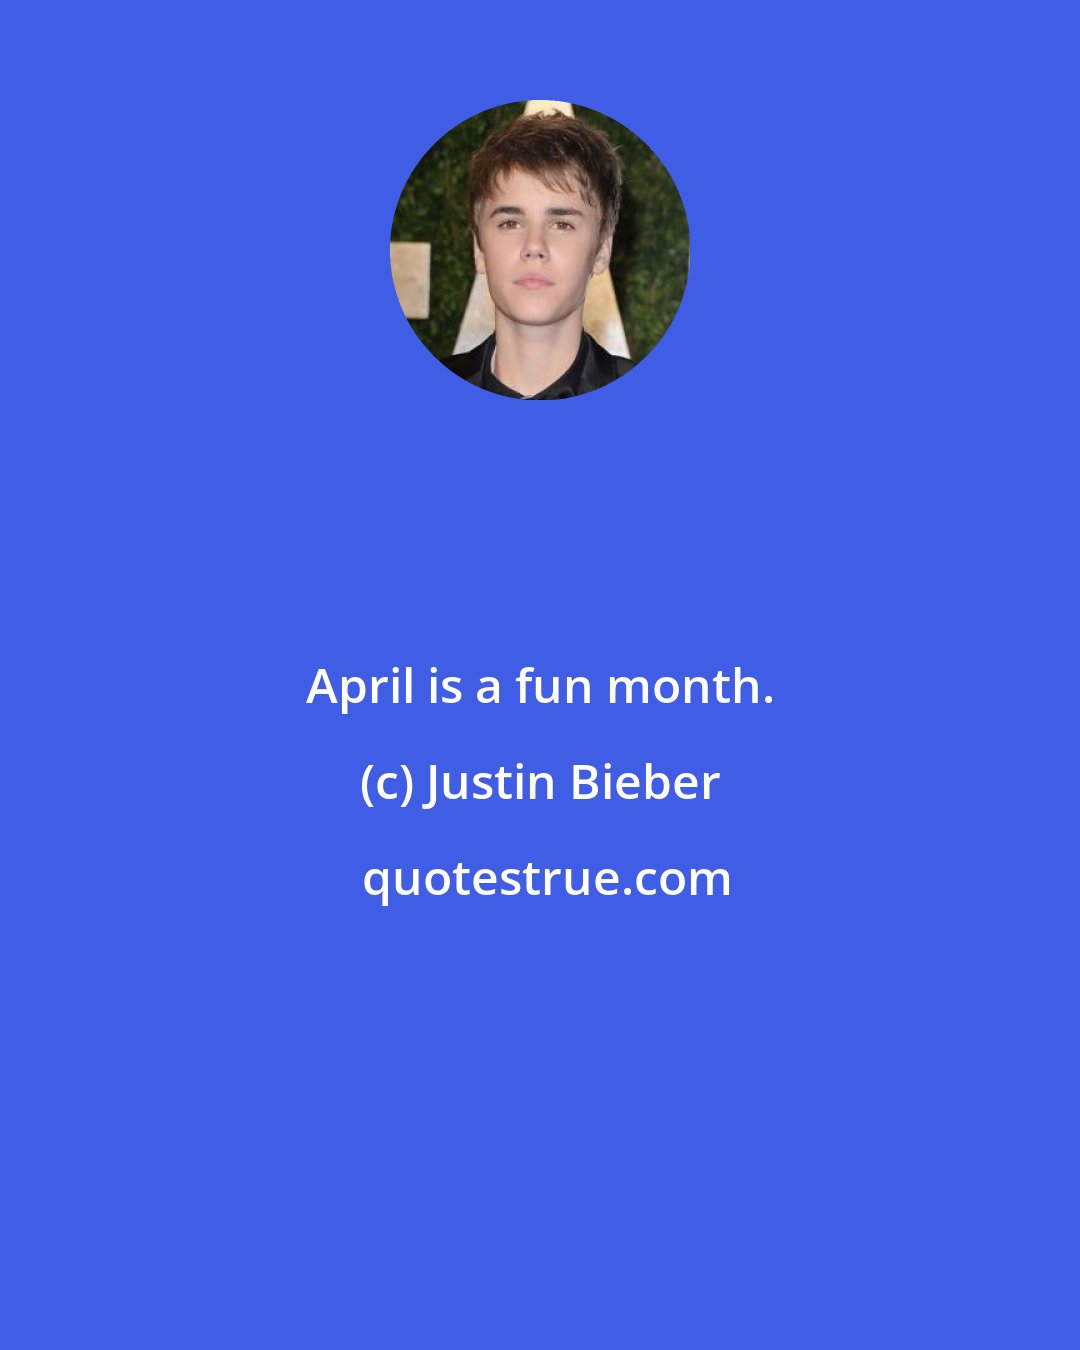 Justin Bieber: April is a fun month.